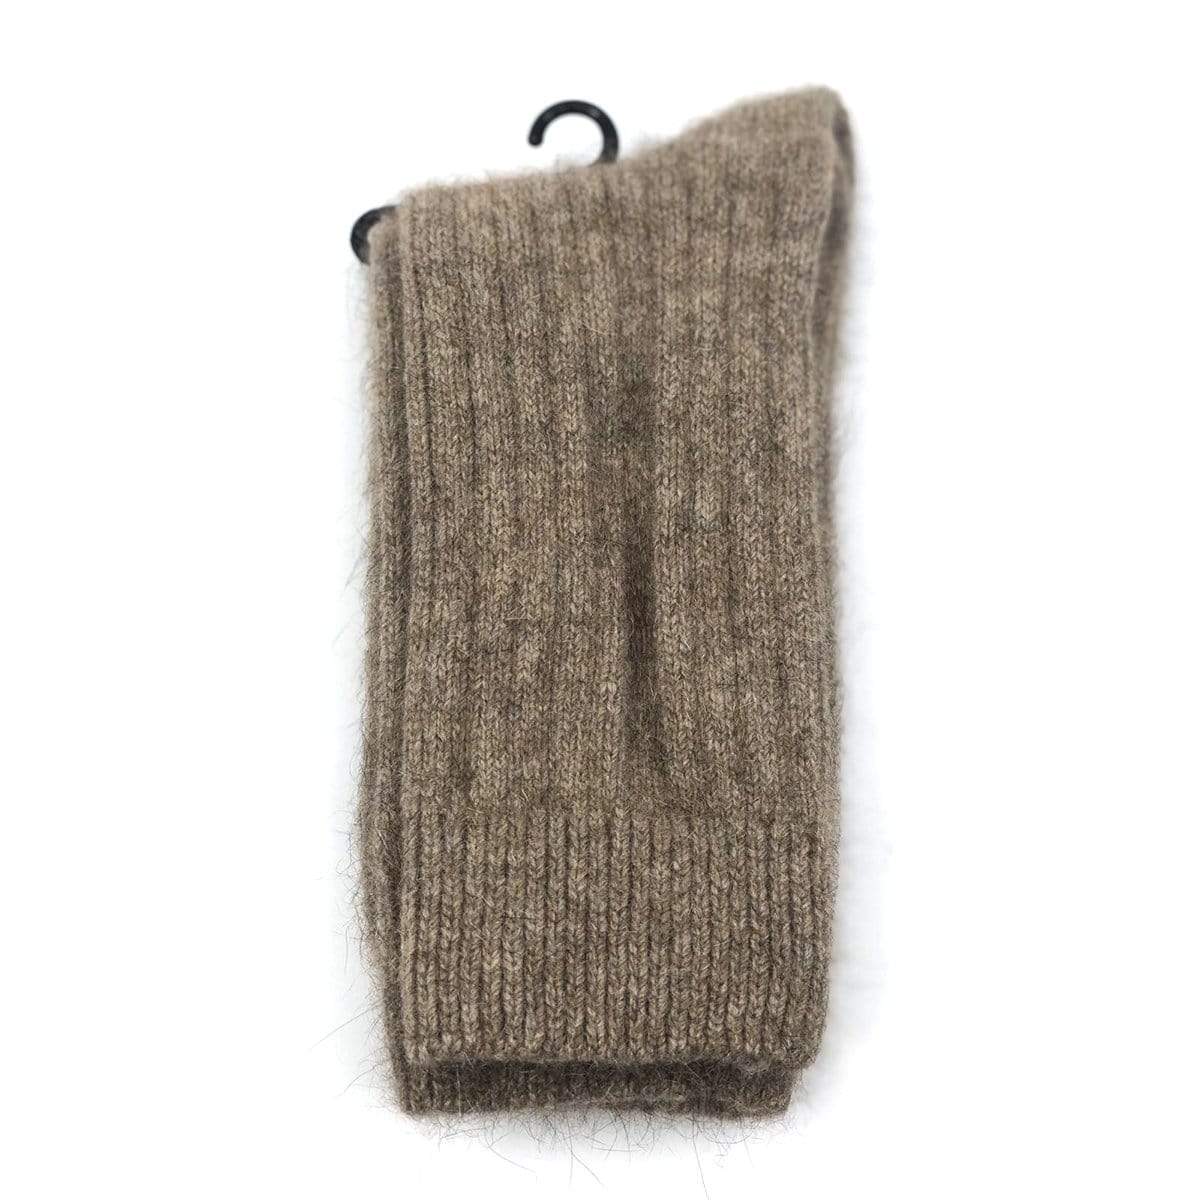 Accessories - Premium Possum and Merino Wool Ribbed Socks - Original UGG Australia Classic